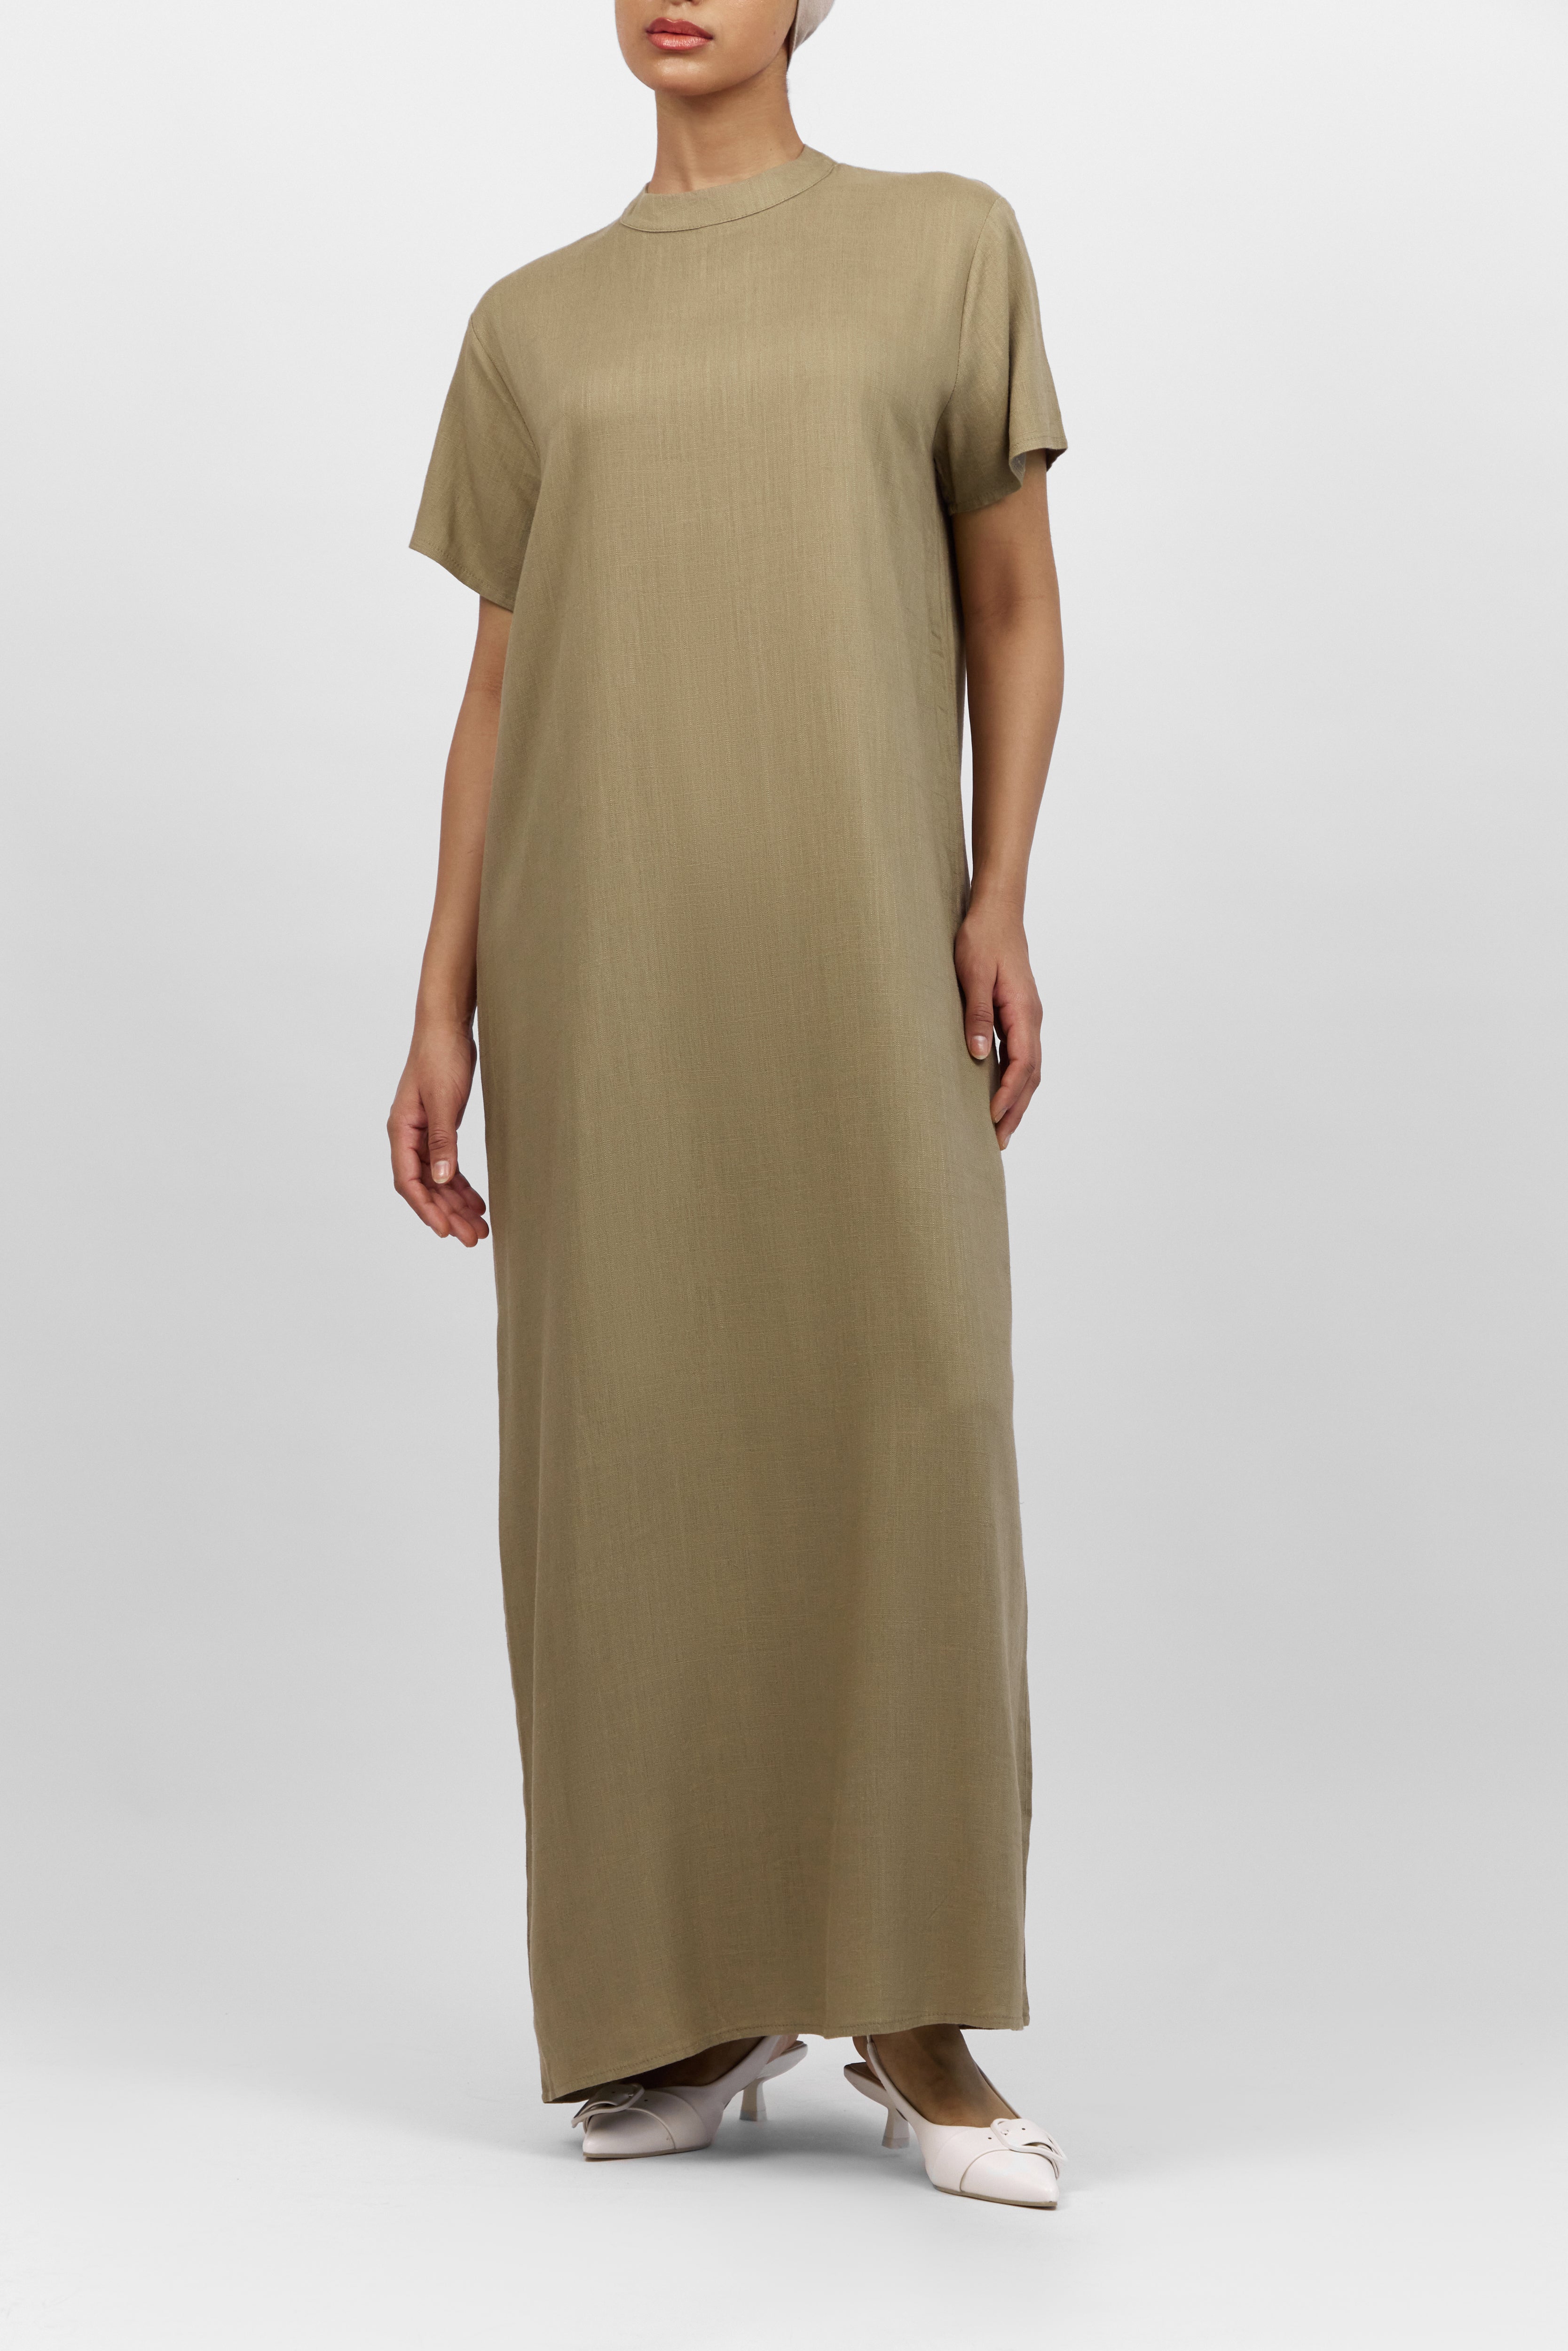 US - Linen Blend Abaya Set - Taupe